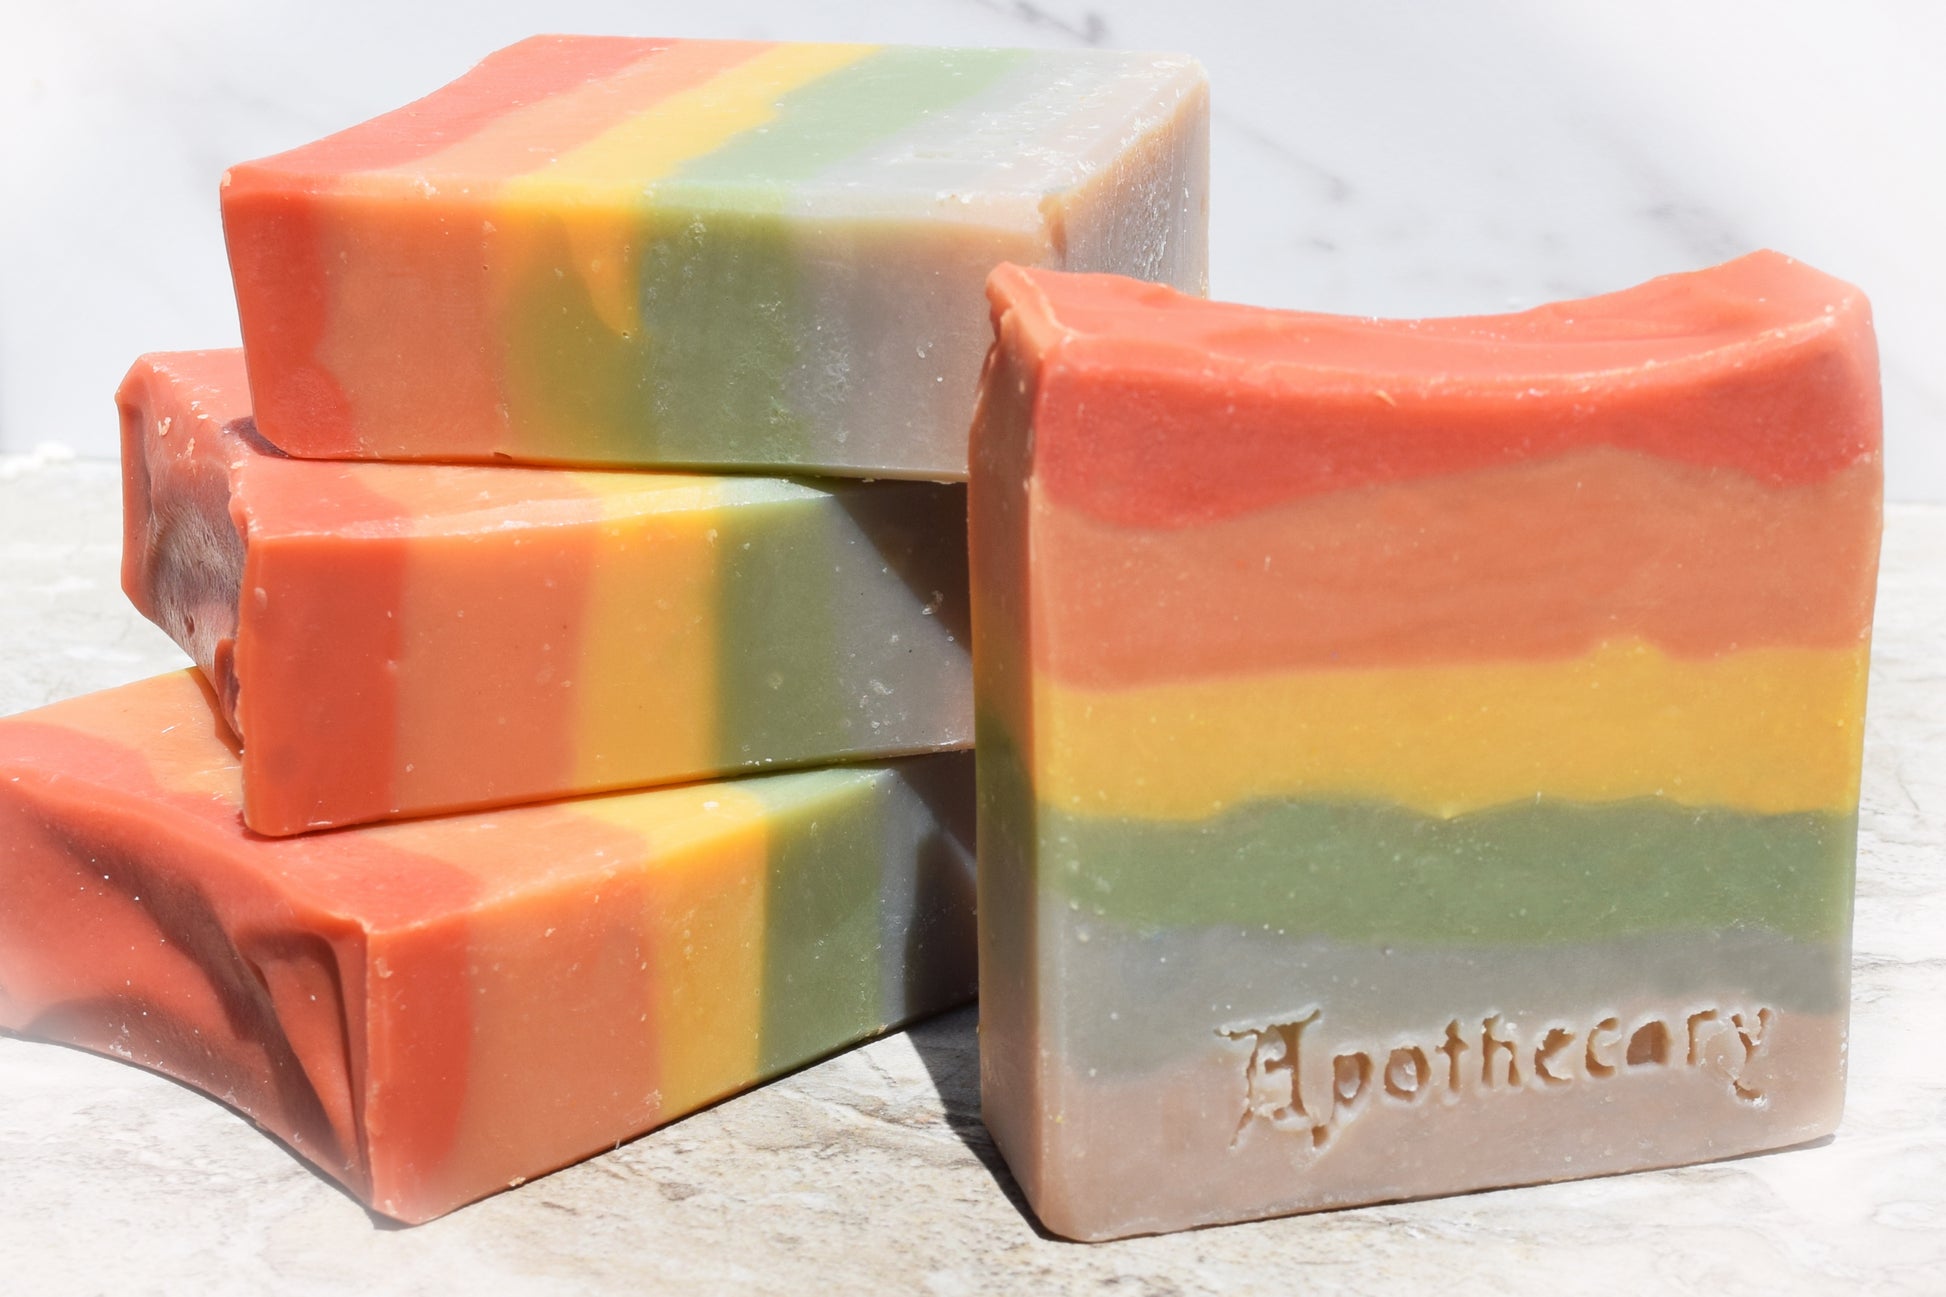 Beautiful handmade rainbow soap that smells like sea salt and orchids